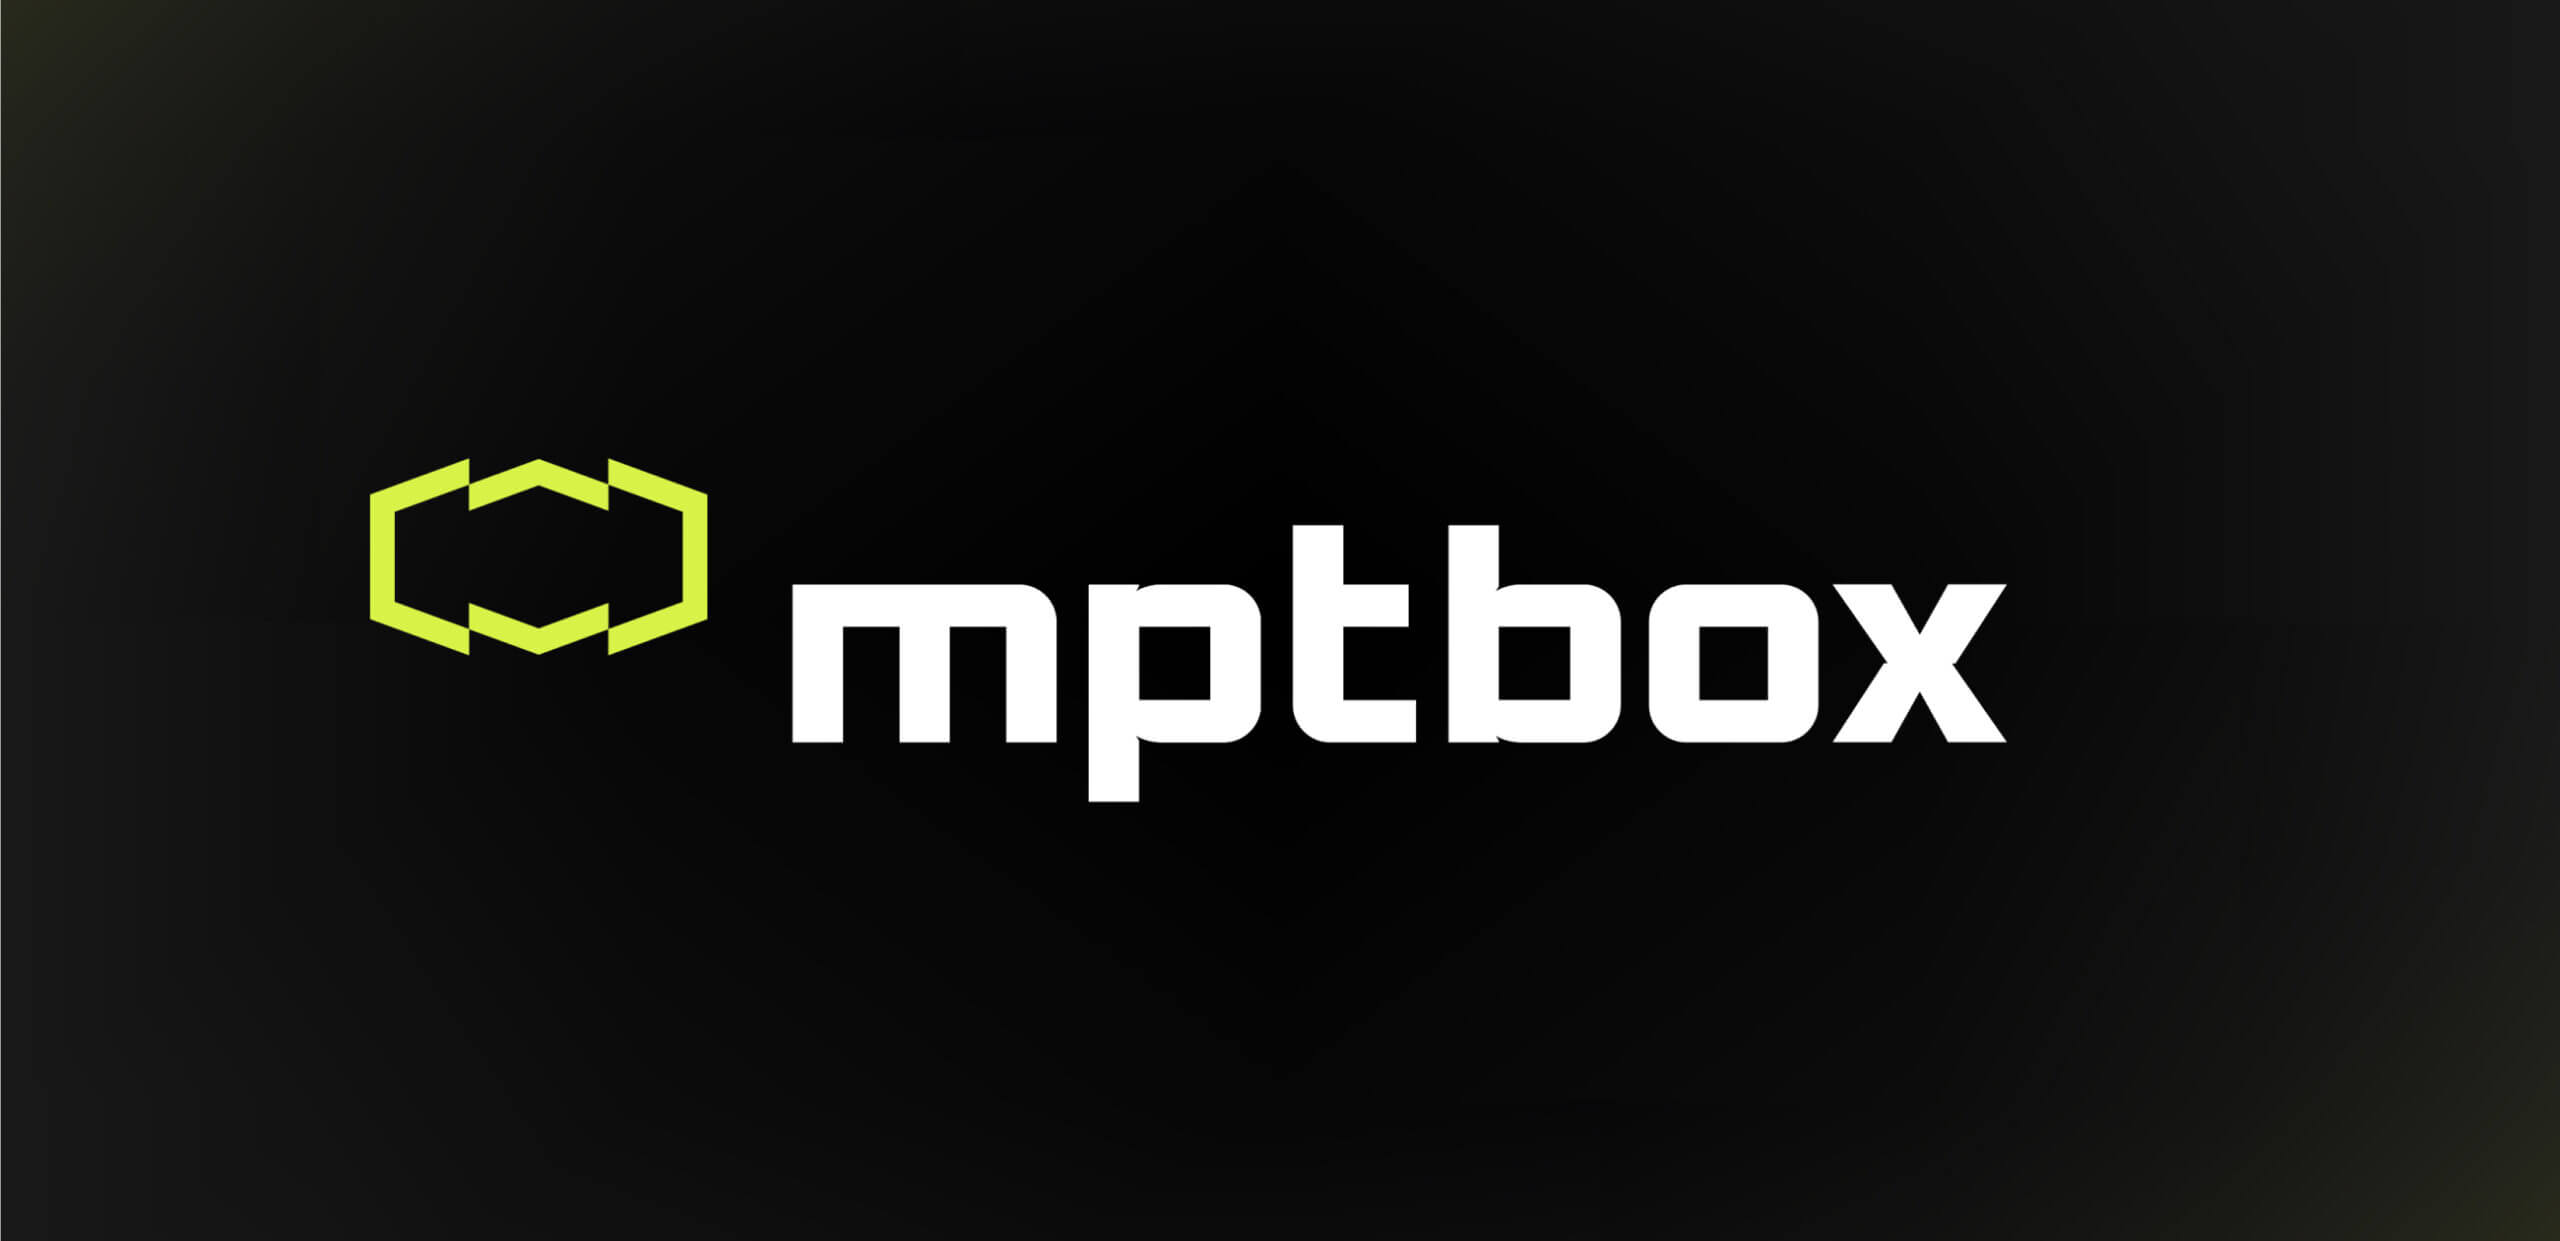 Mptbox – Metaverse website & branding - Website Development - Photo 1